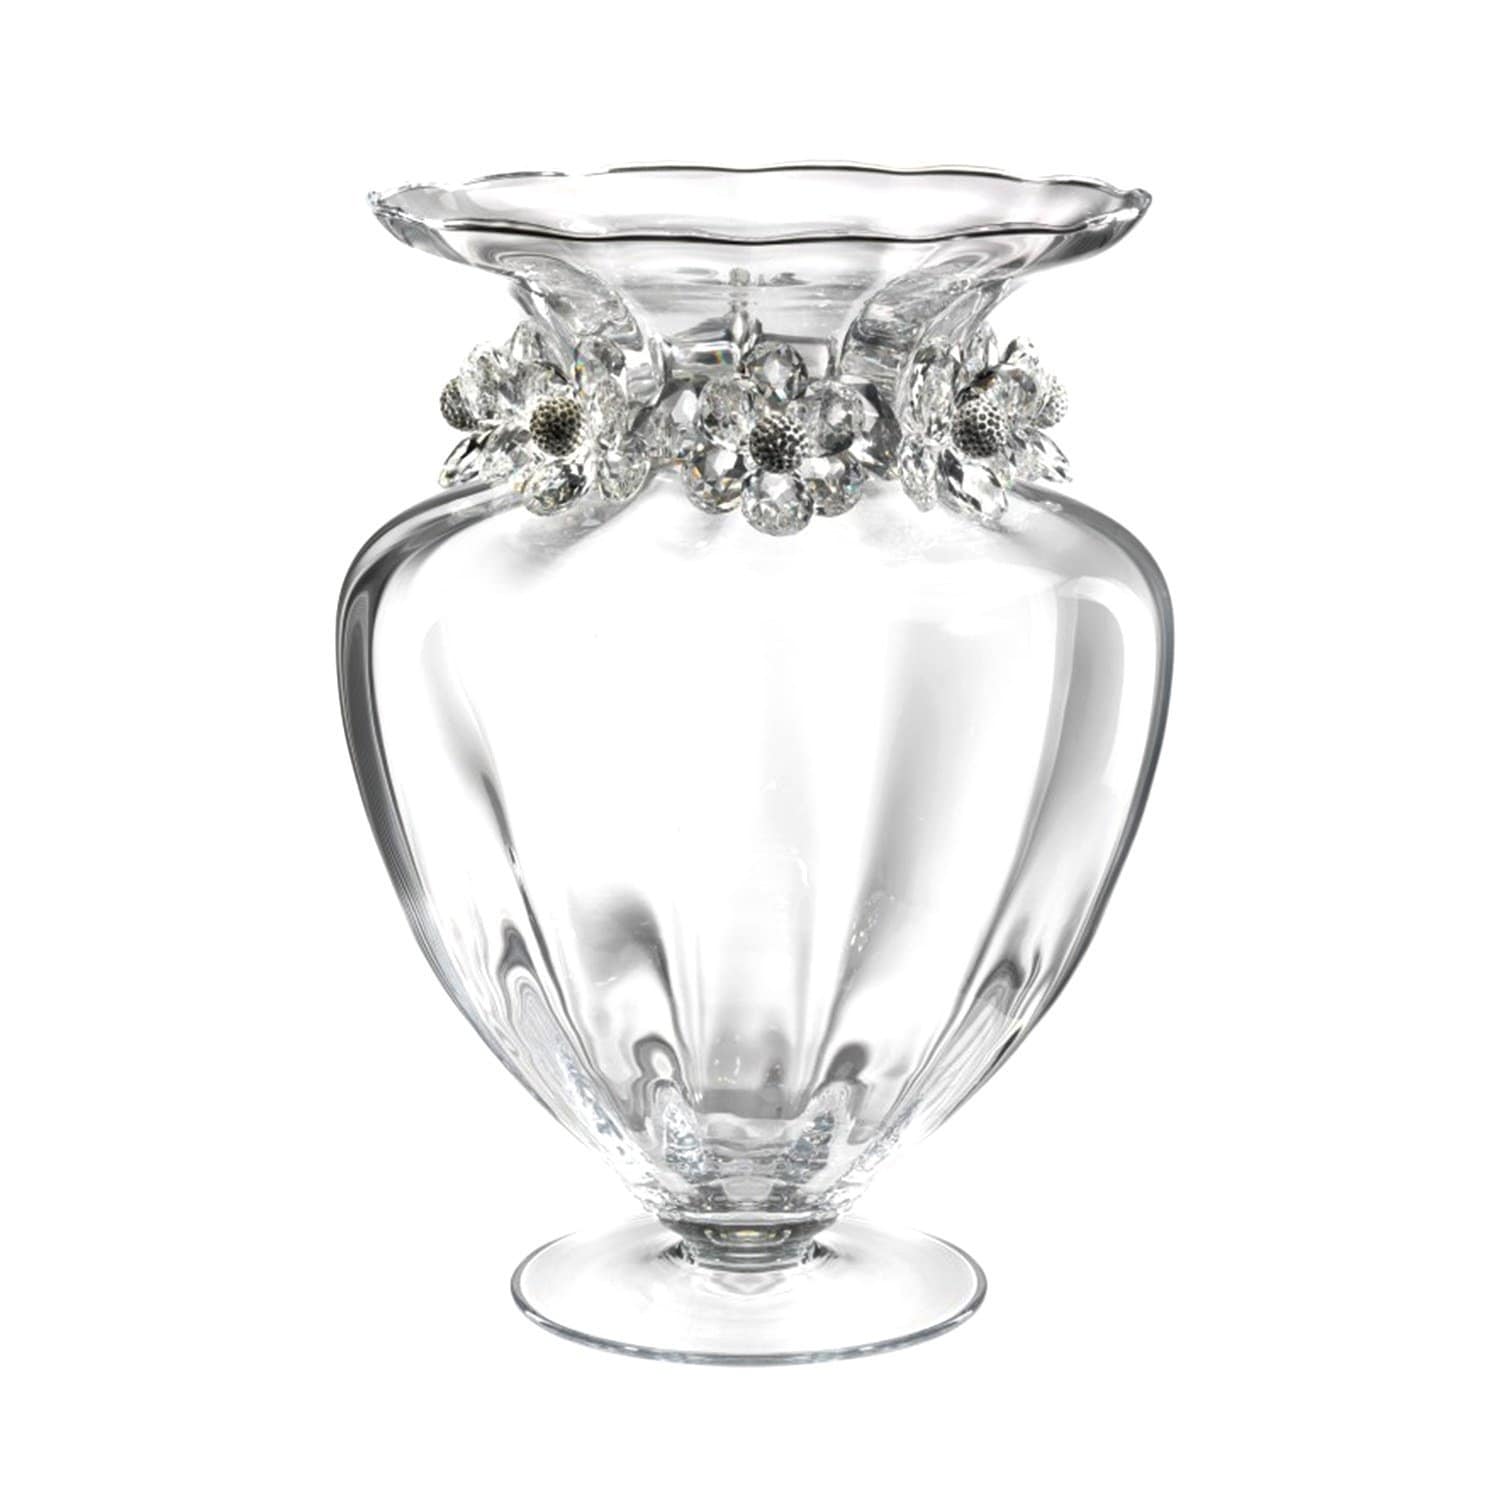 Debora Carlucci Amphora Crystal Flowers Glass Vase - 42 x 32 cm - DC5512 - Jashanmal Home